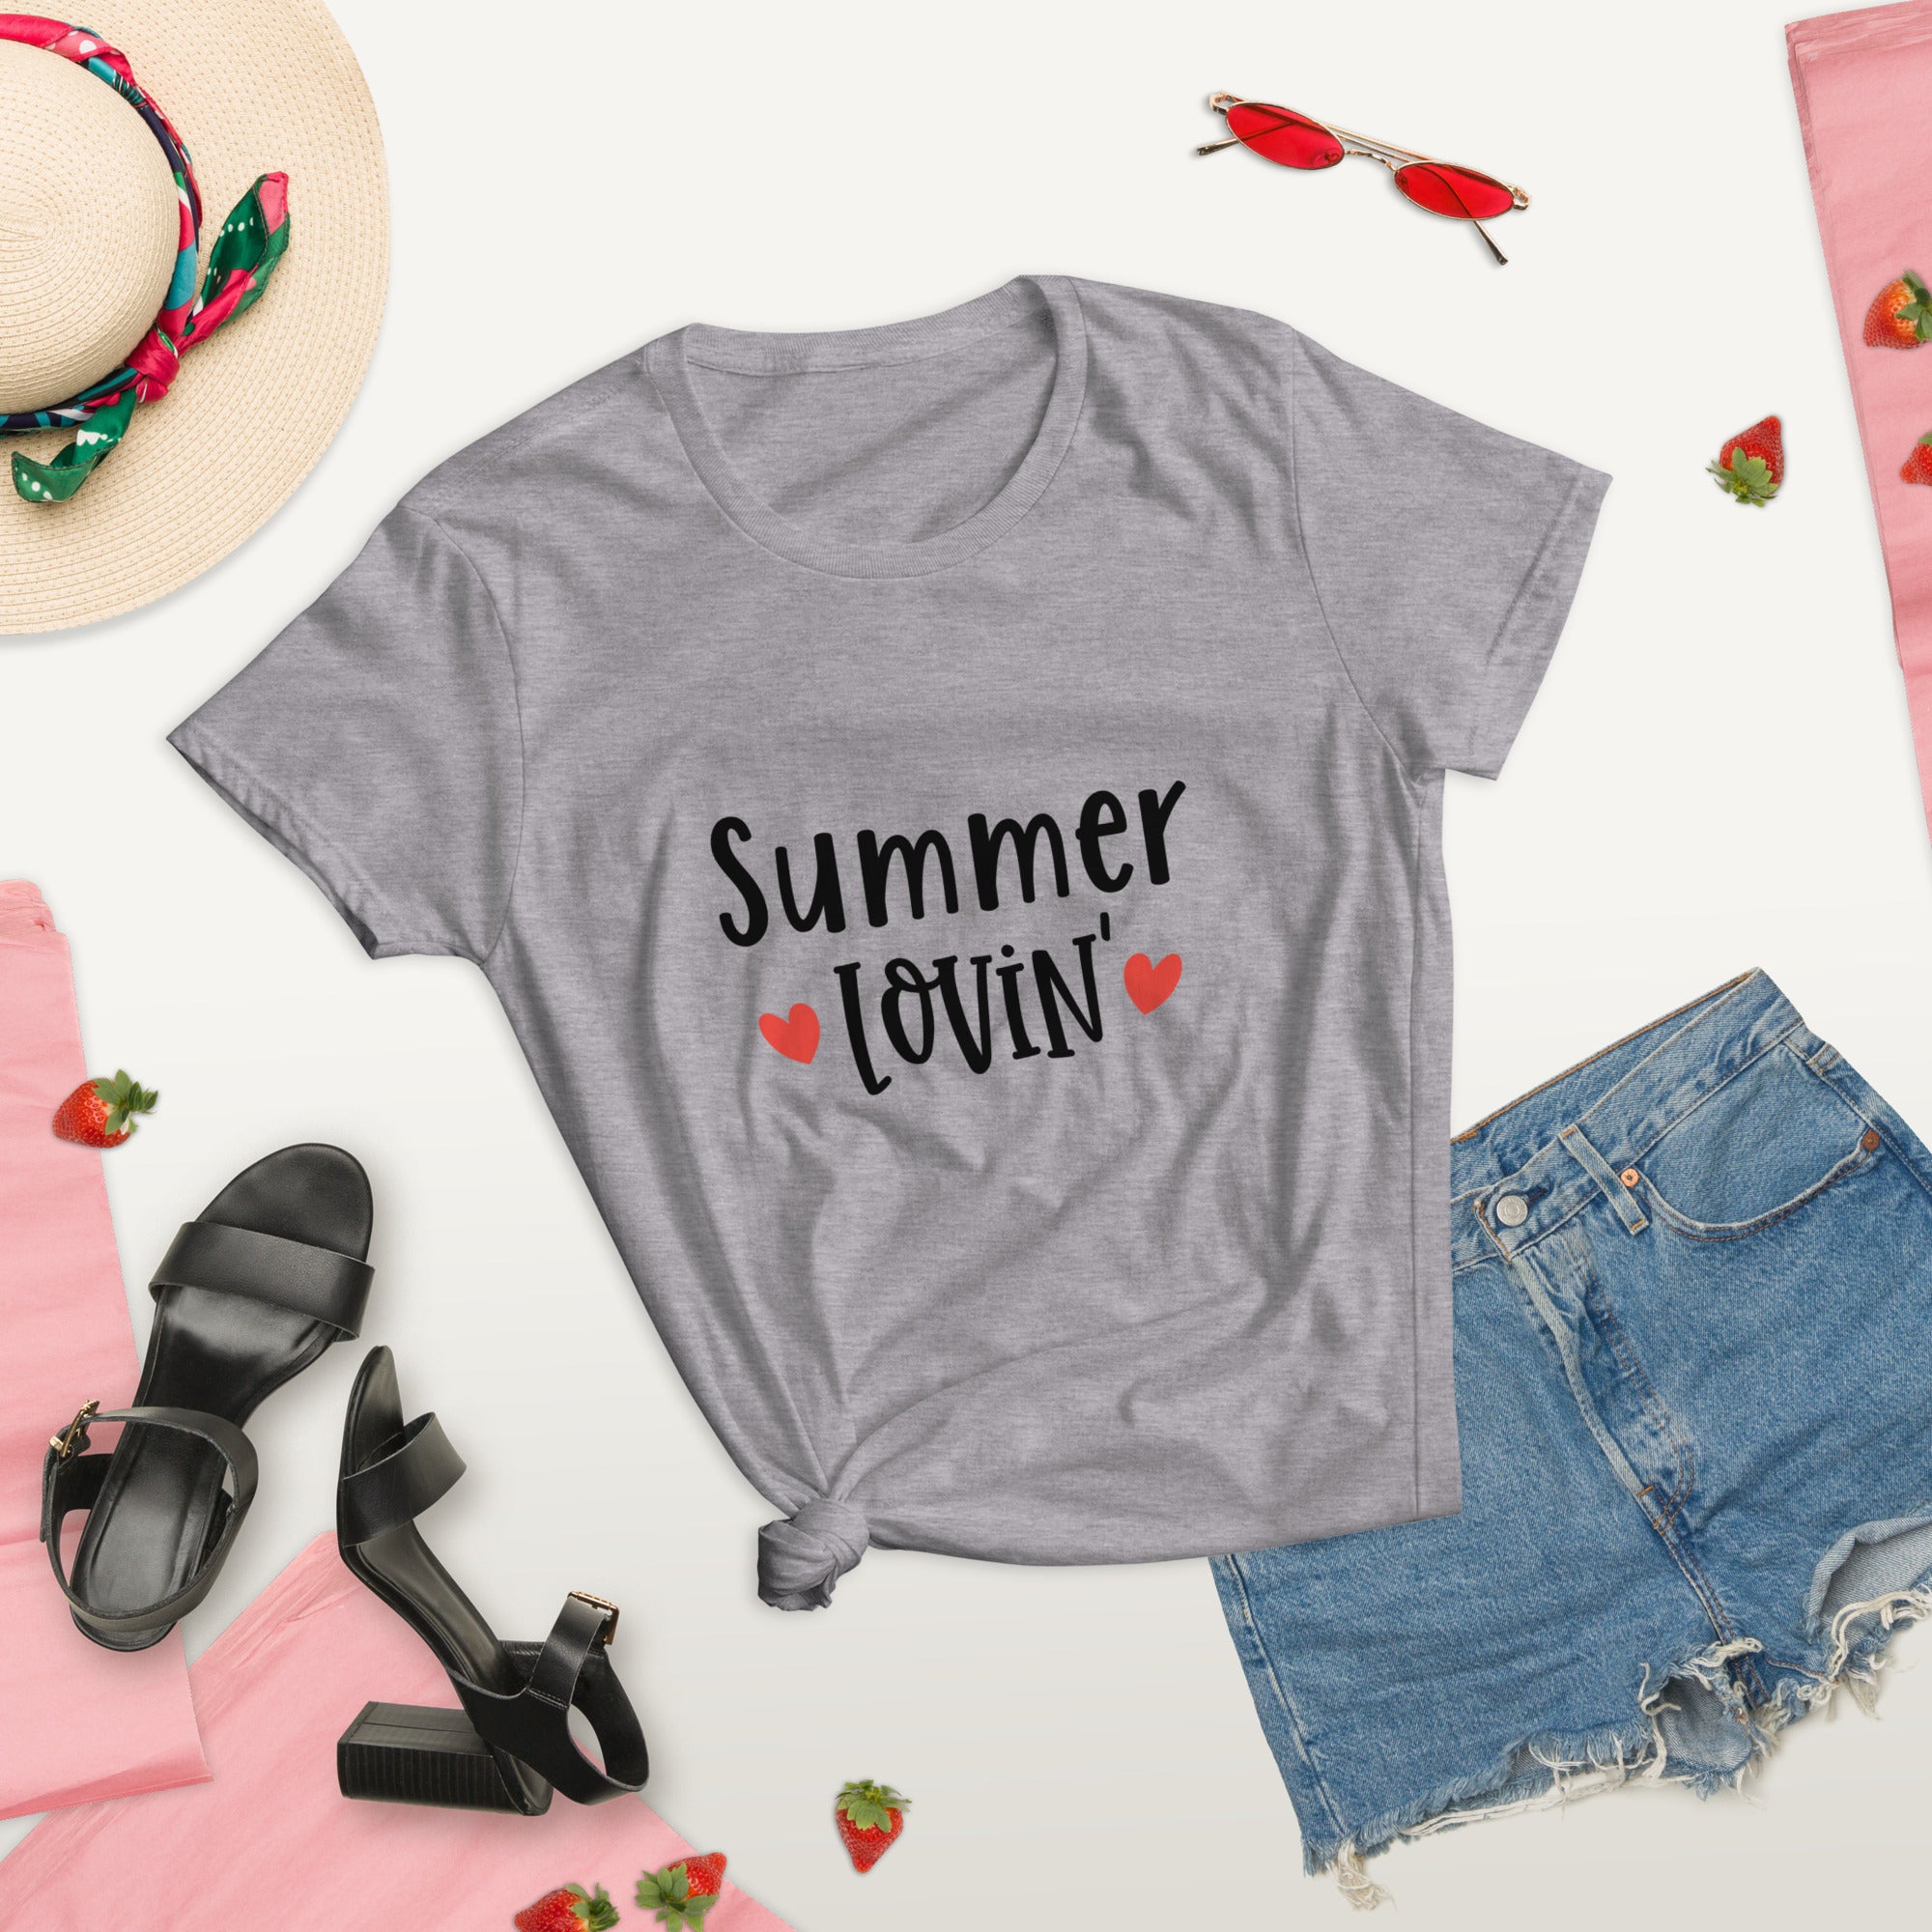 Summer Lovin' Women's T-Shirt